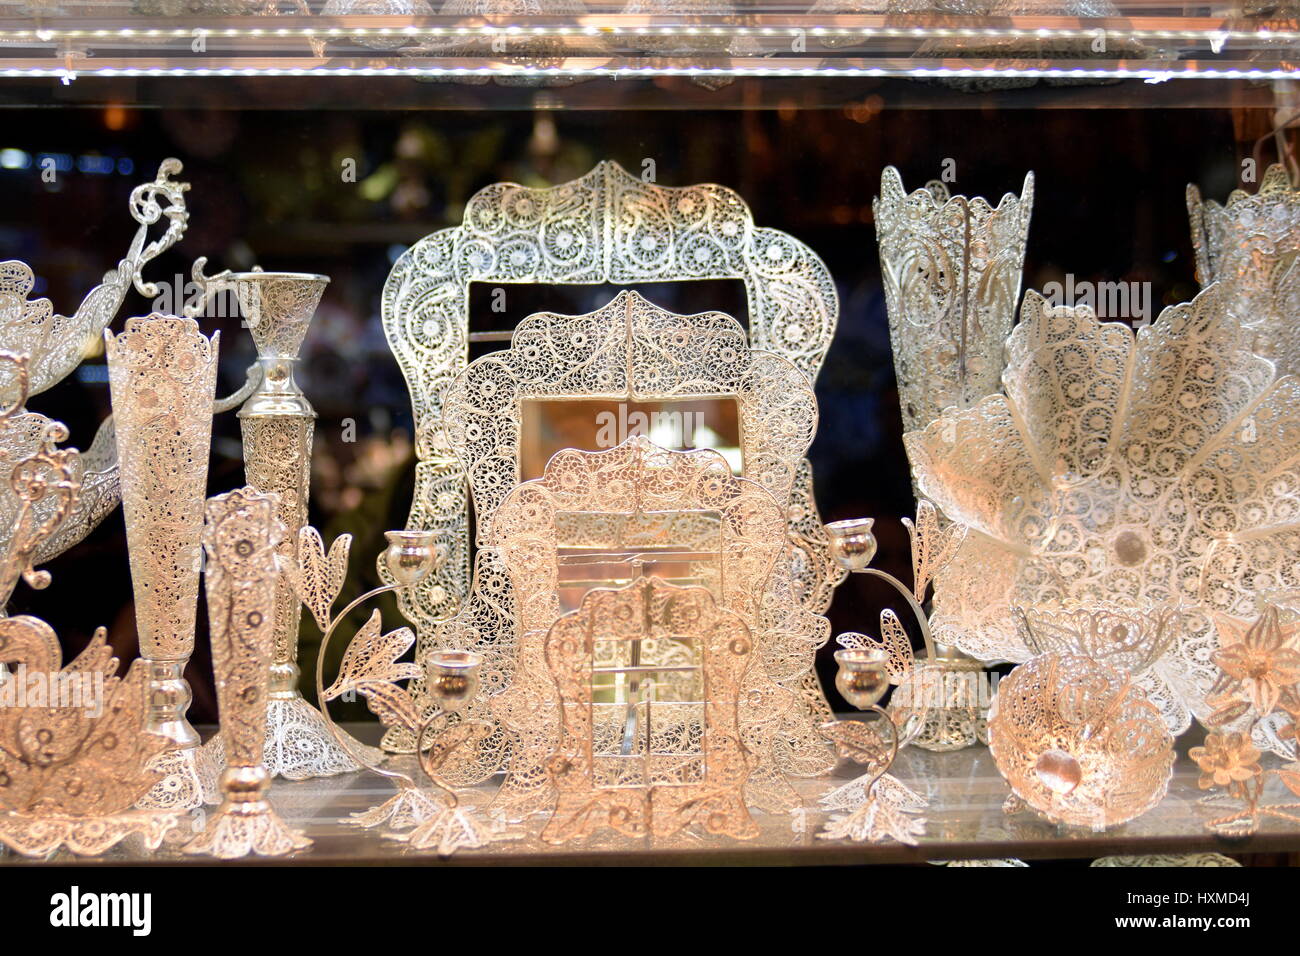 Handicraft made in Esfahan, Isfahan Grand Bazaar, Naqsh-e Jahan Square, esfahan, Iran Stock Photo